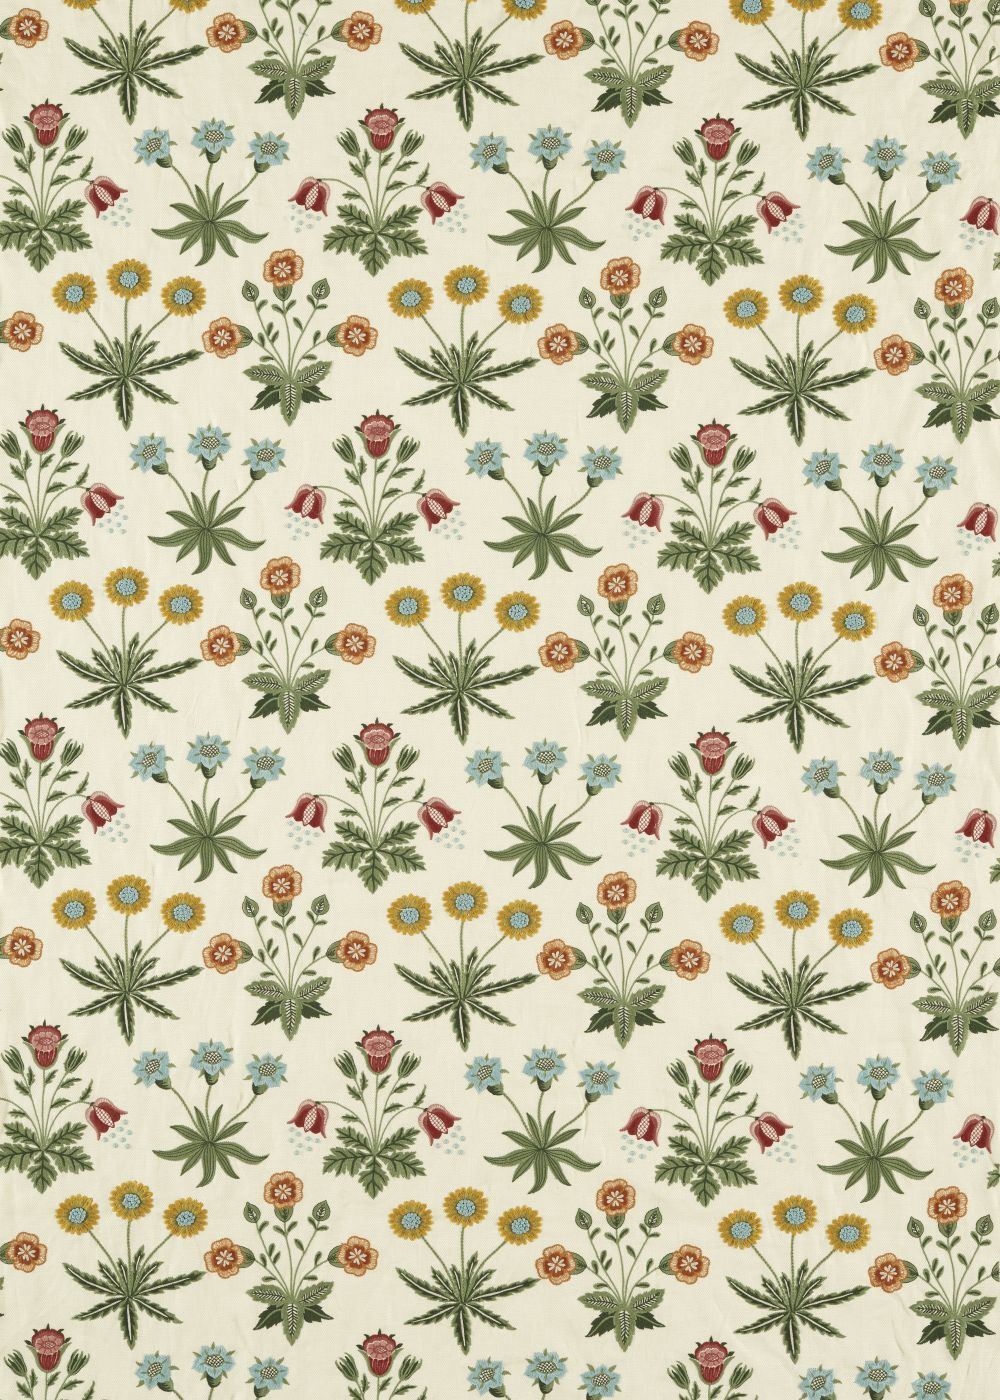 Daisy Embroidery Fabric - Cream / Multi - by Morris